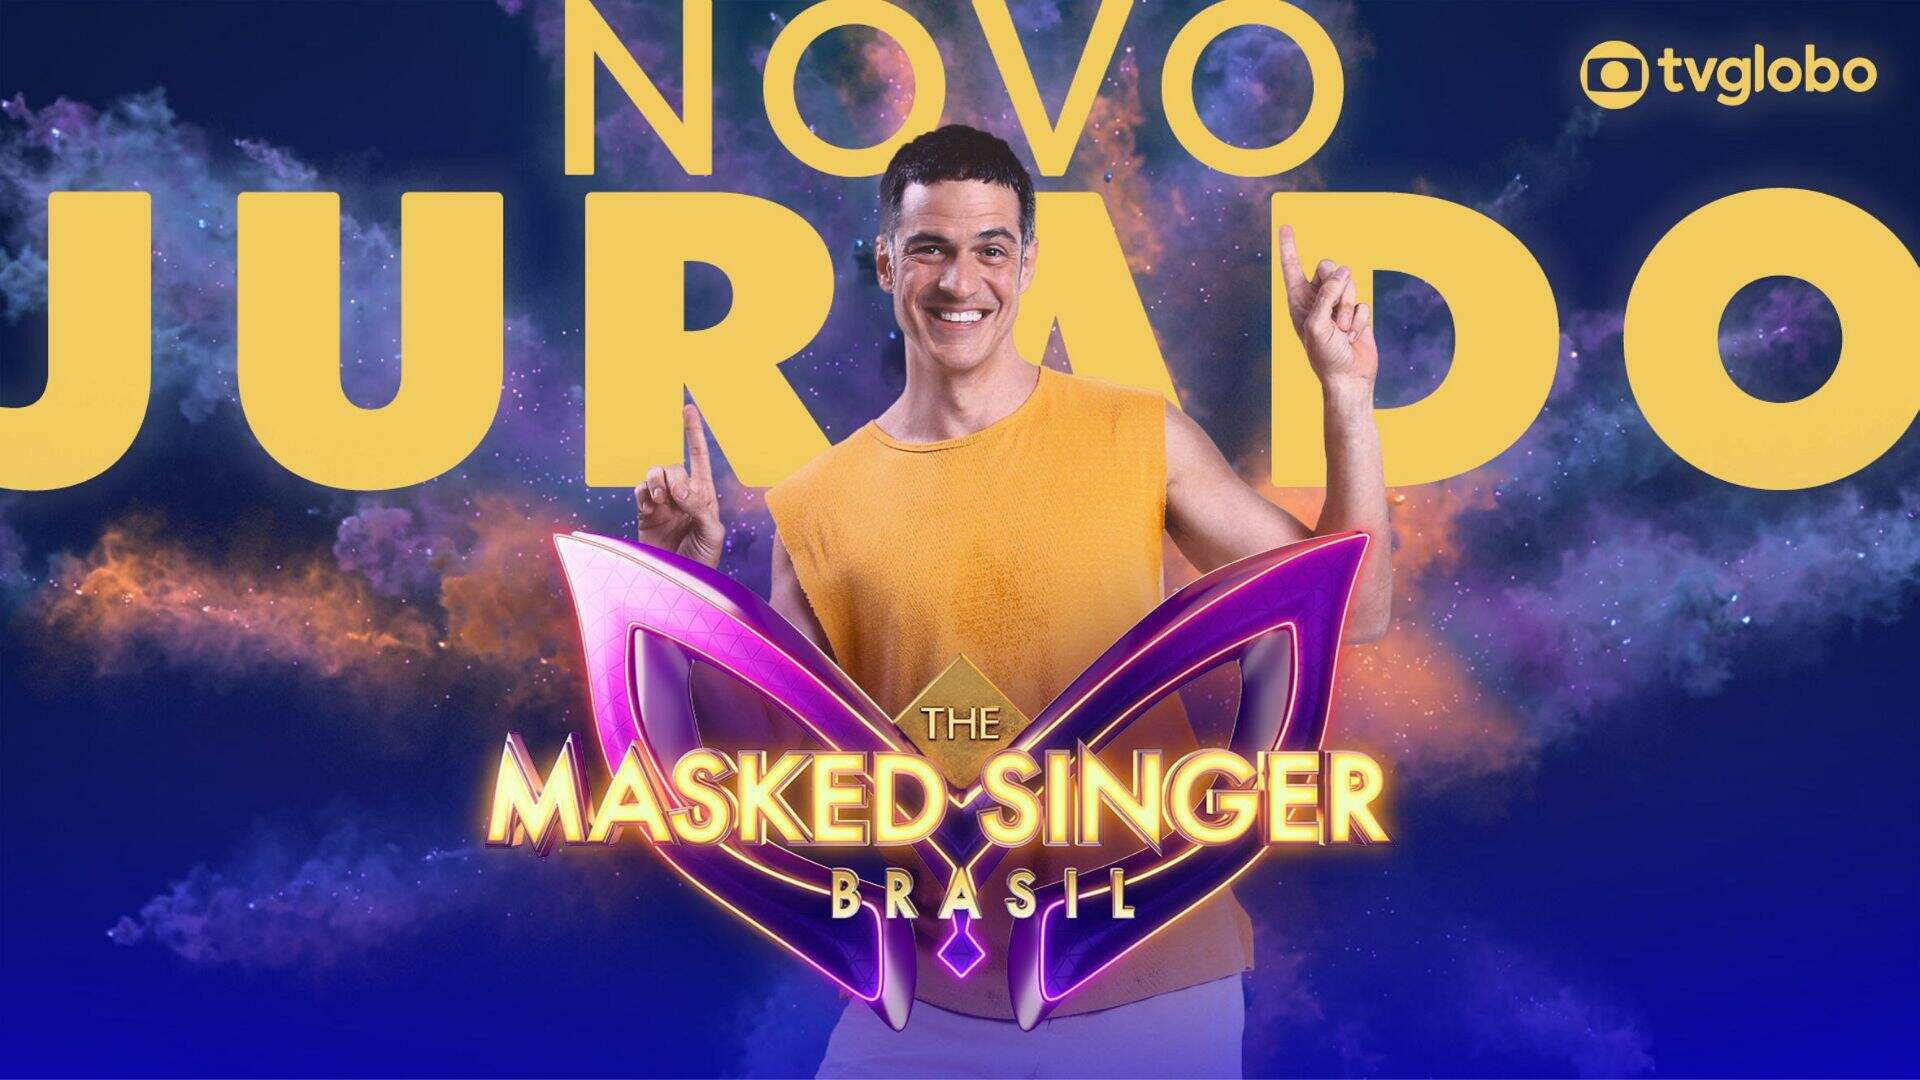 The Masked Singer Brasil: Mateus Solano entra para elenco de jurados do programa - Metropolitana FM